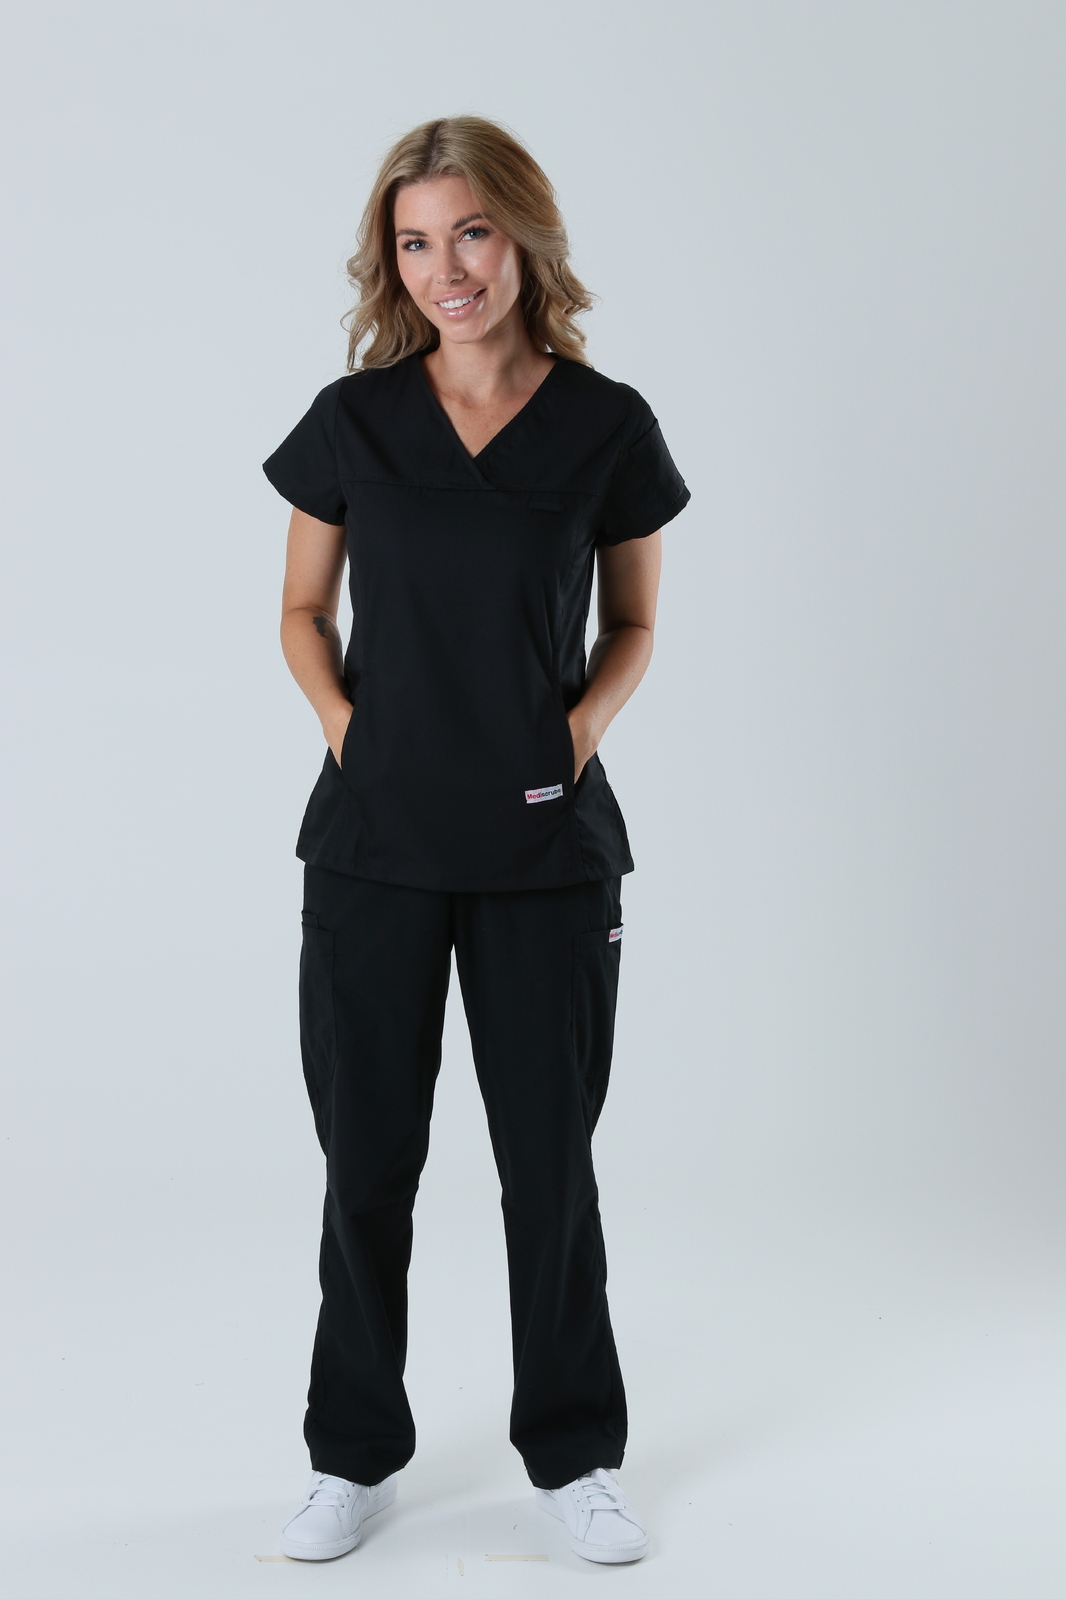 St Vincent's Hospital Emergency Department  Emergency Physician Uniform Set Bundle (Women's Fit Solid and Regular Pants in Black incl logos)